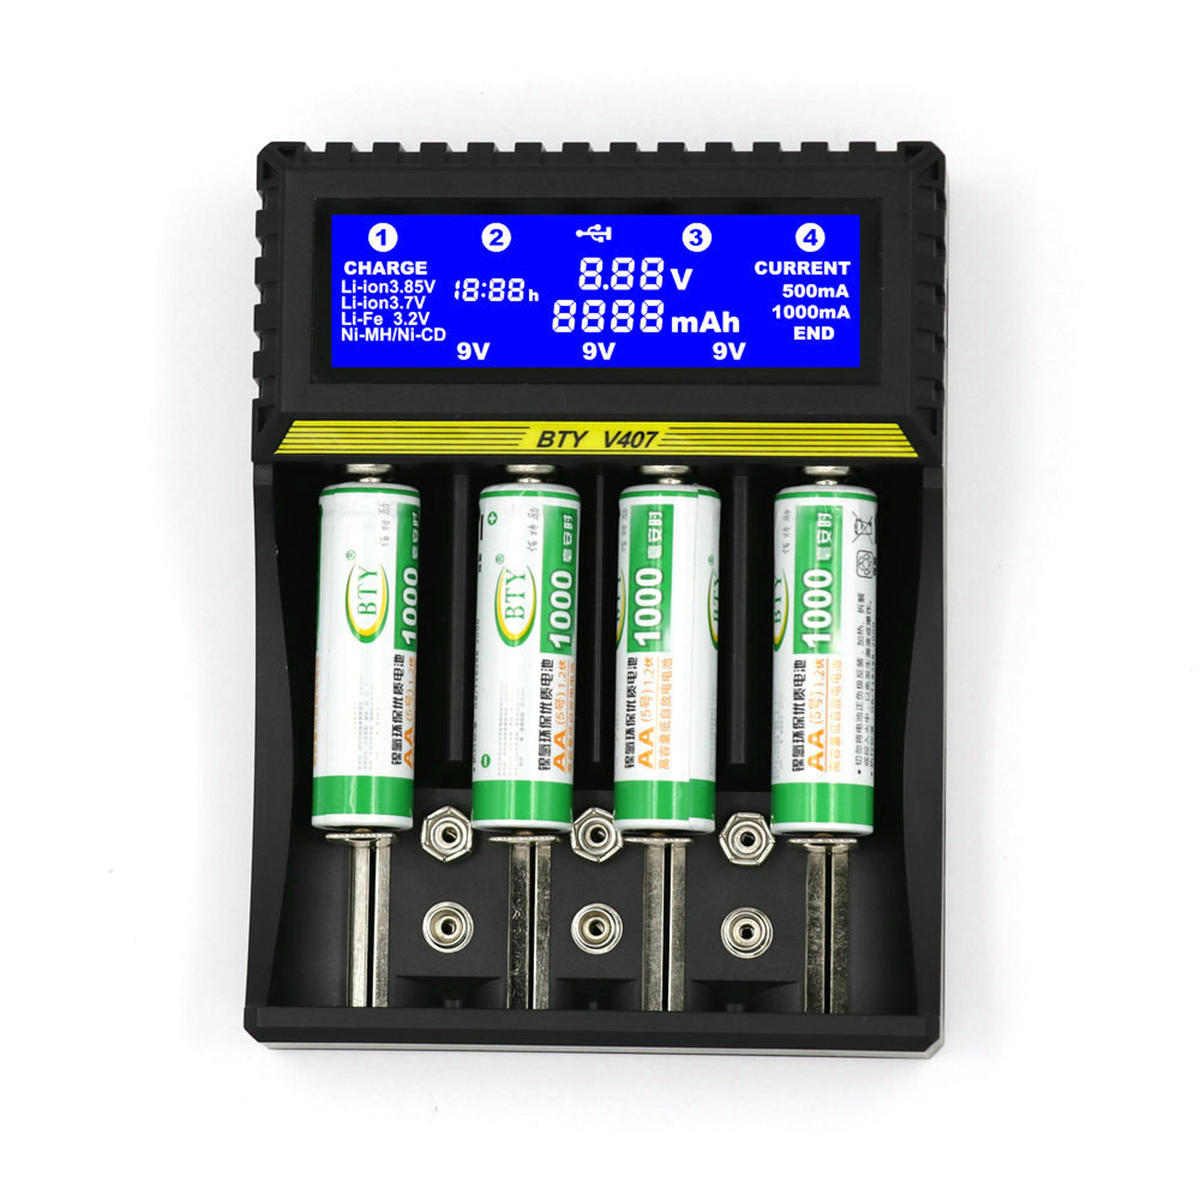 

Universal Smart LCD Charger Multifuncation Lithium Battery Charger For 9V AA AAA Ni-MH Ni-CD 18650 Li-ion Battery Charge